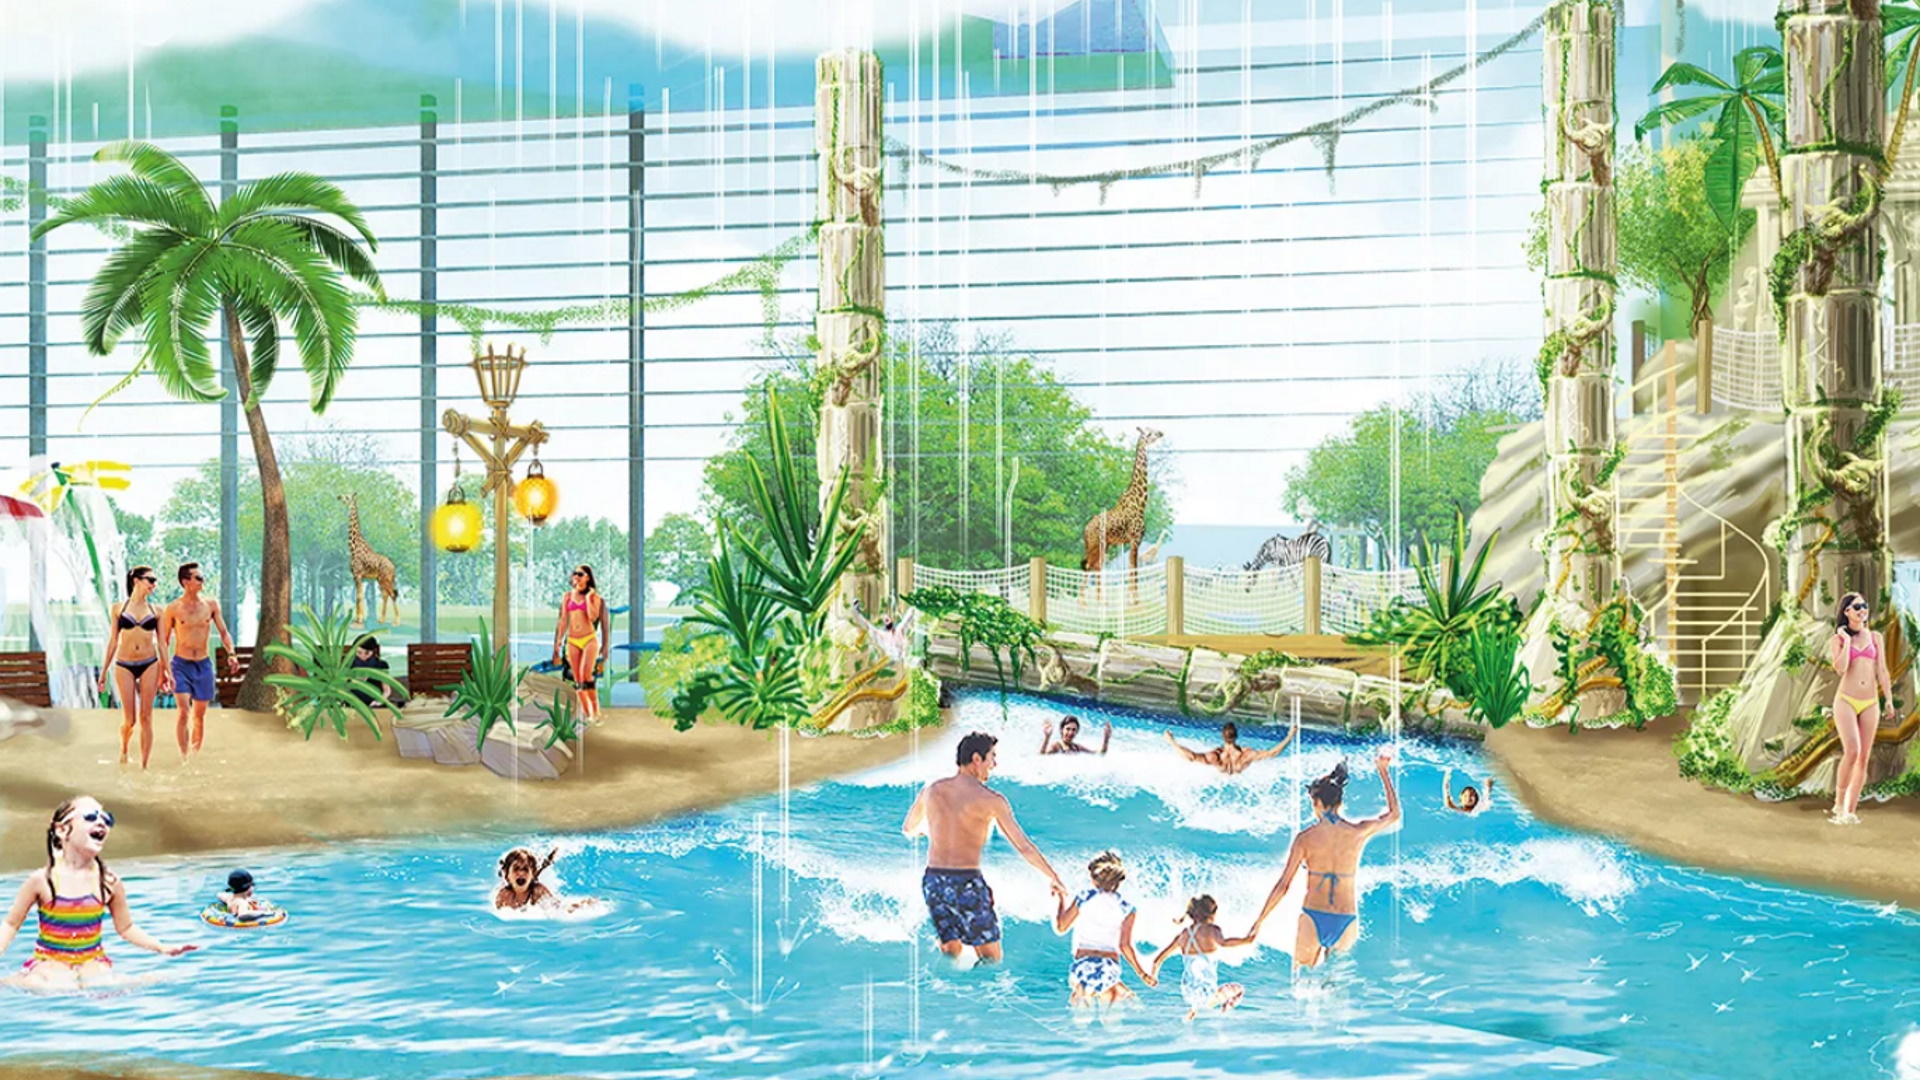 Chessington World of Adventures Resort - Waterpark Proposal Wave Pool Artists Impression